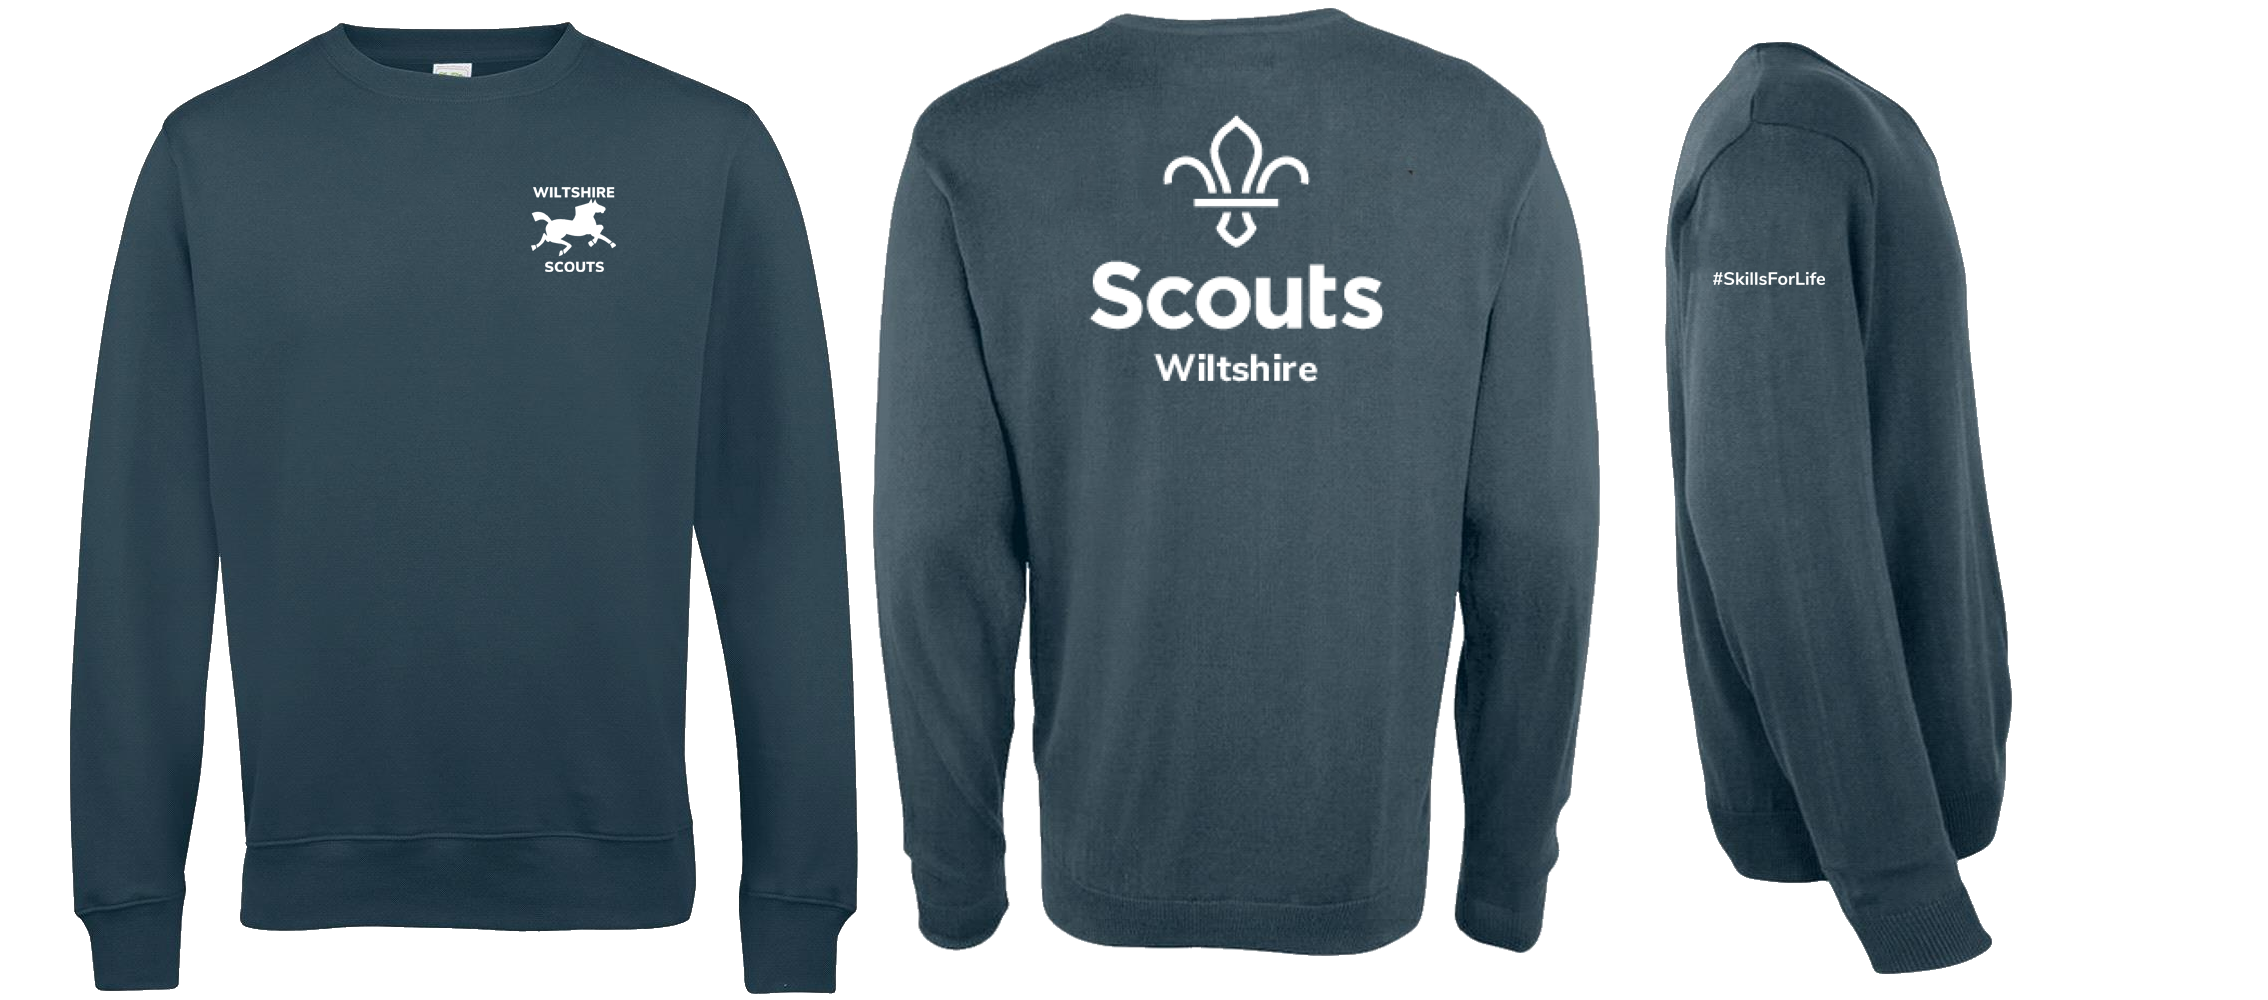 Wiltshire Scouts sweatshirt